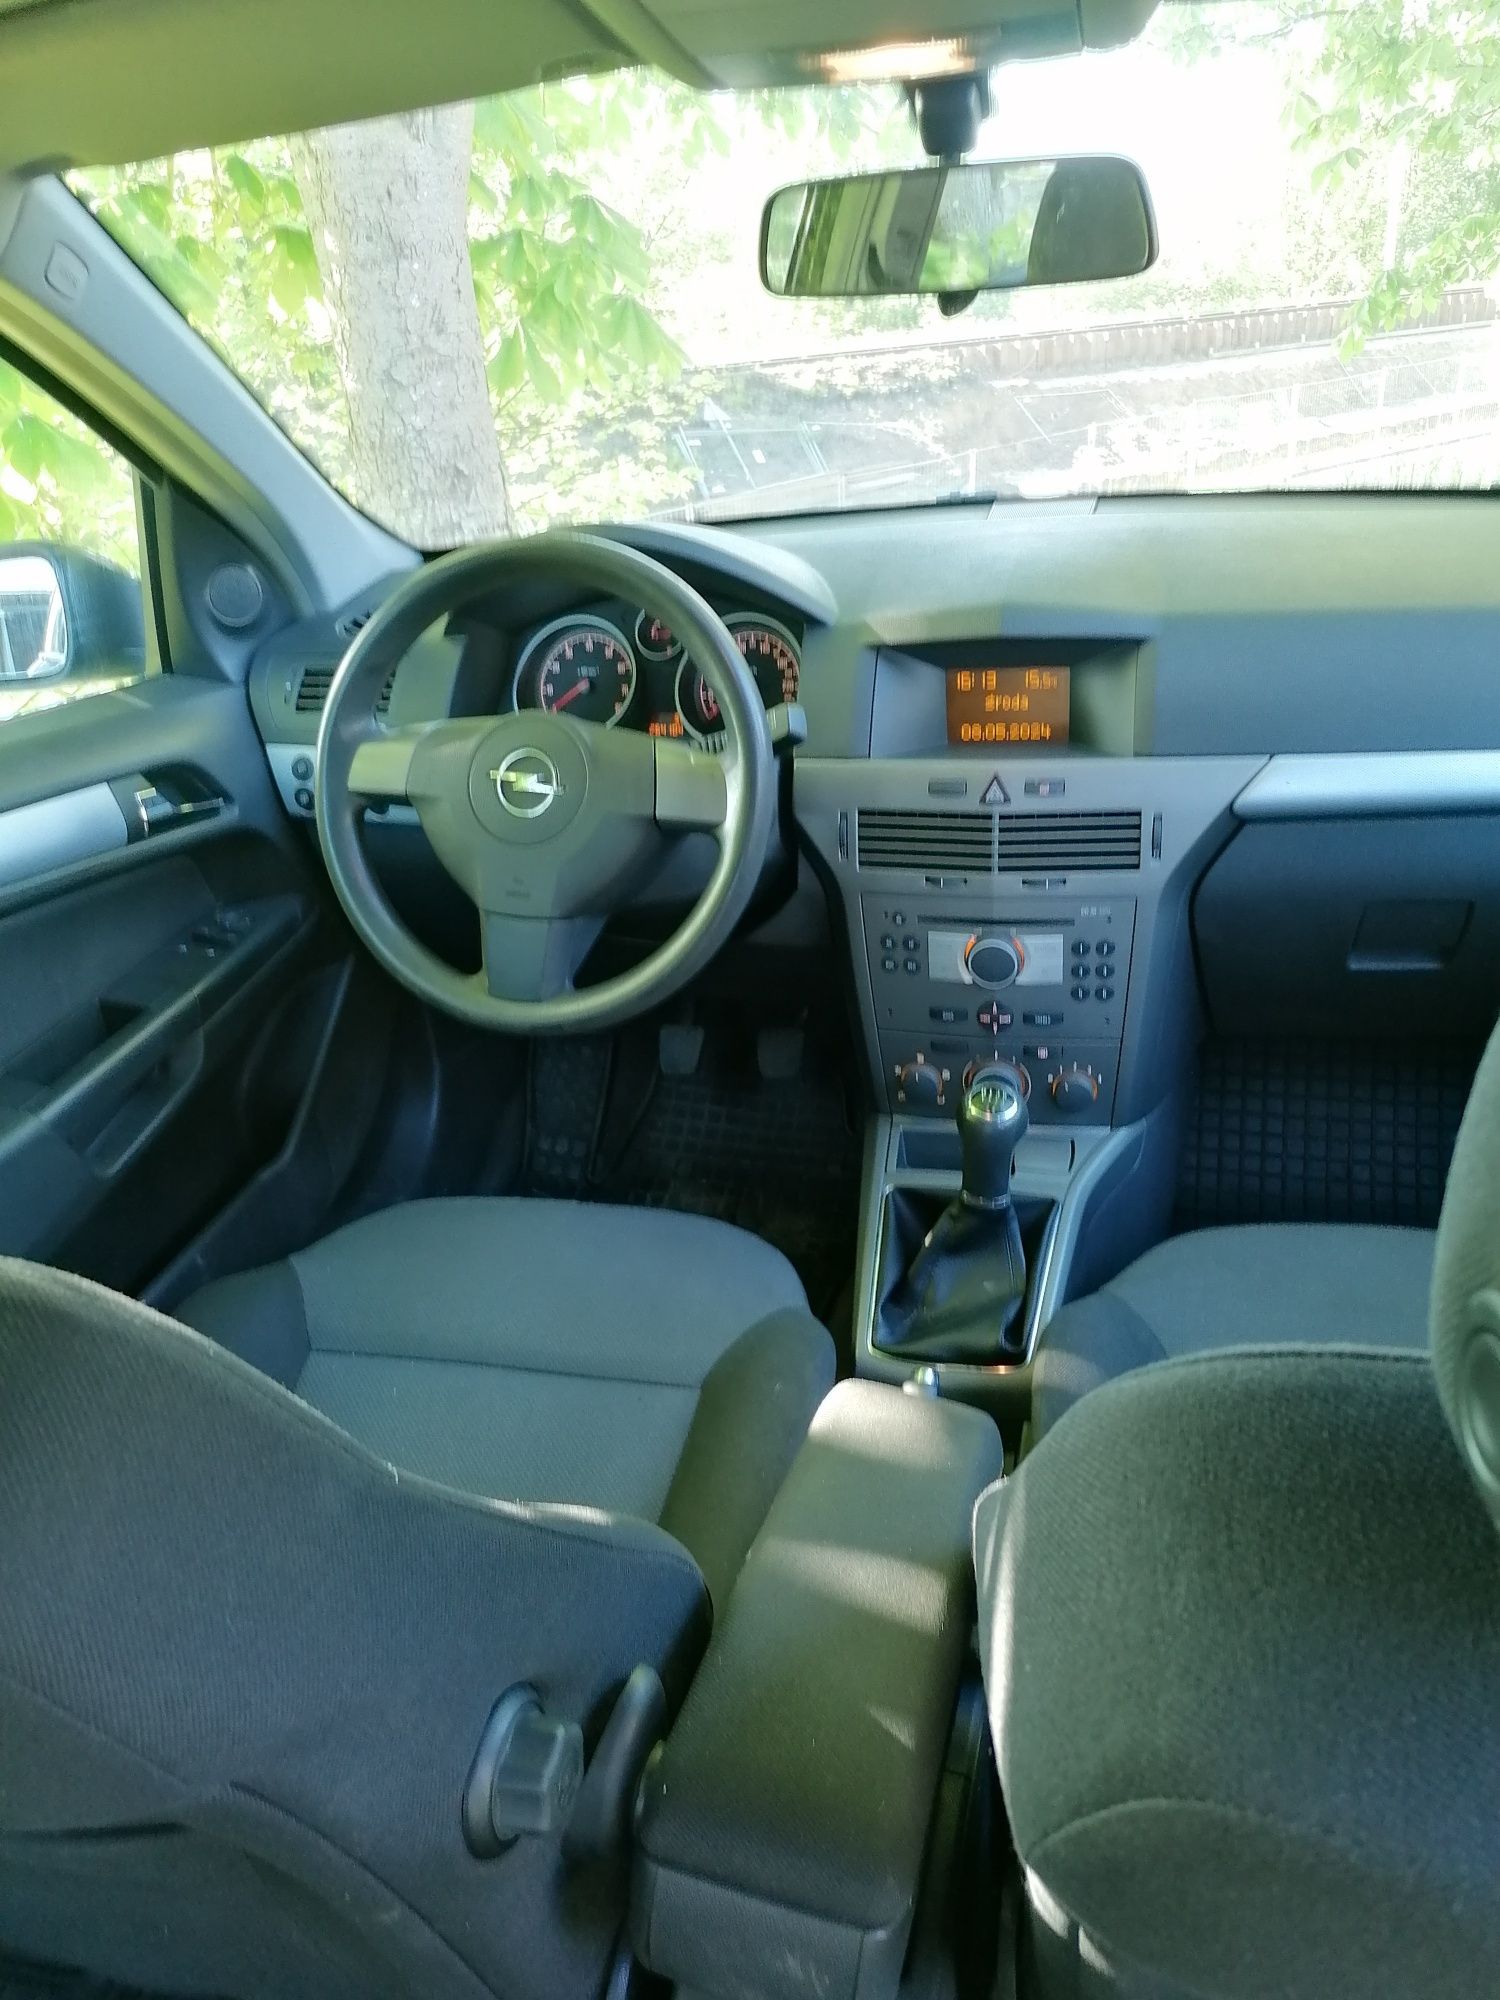 Opel Astra h 1.4